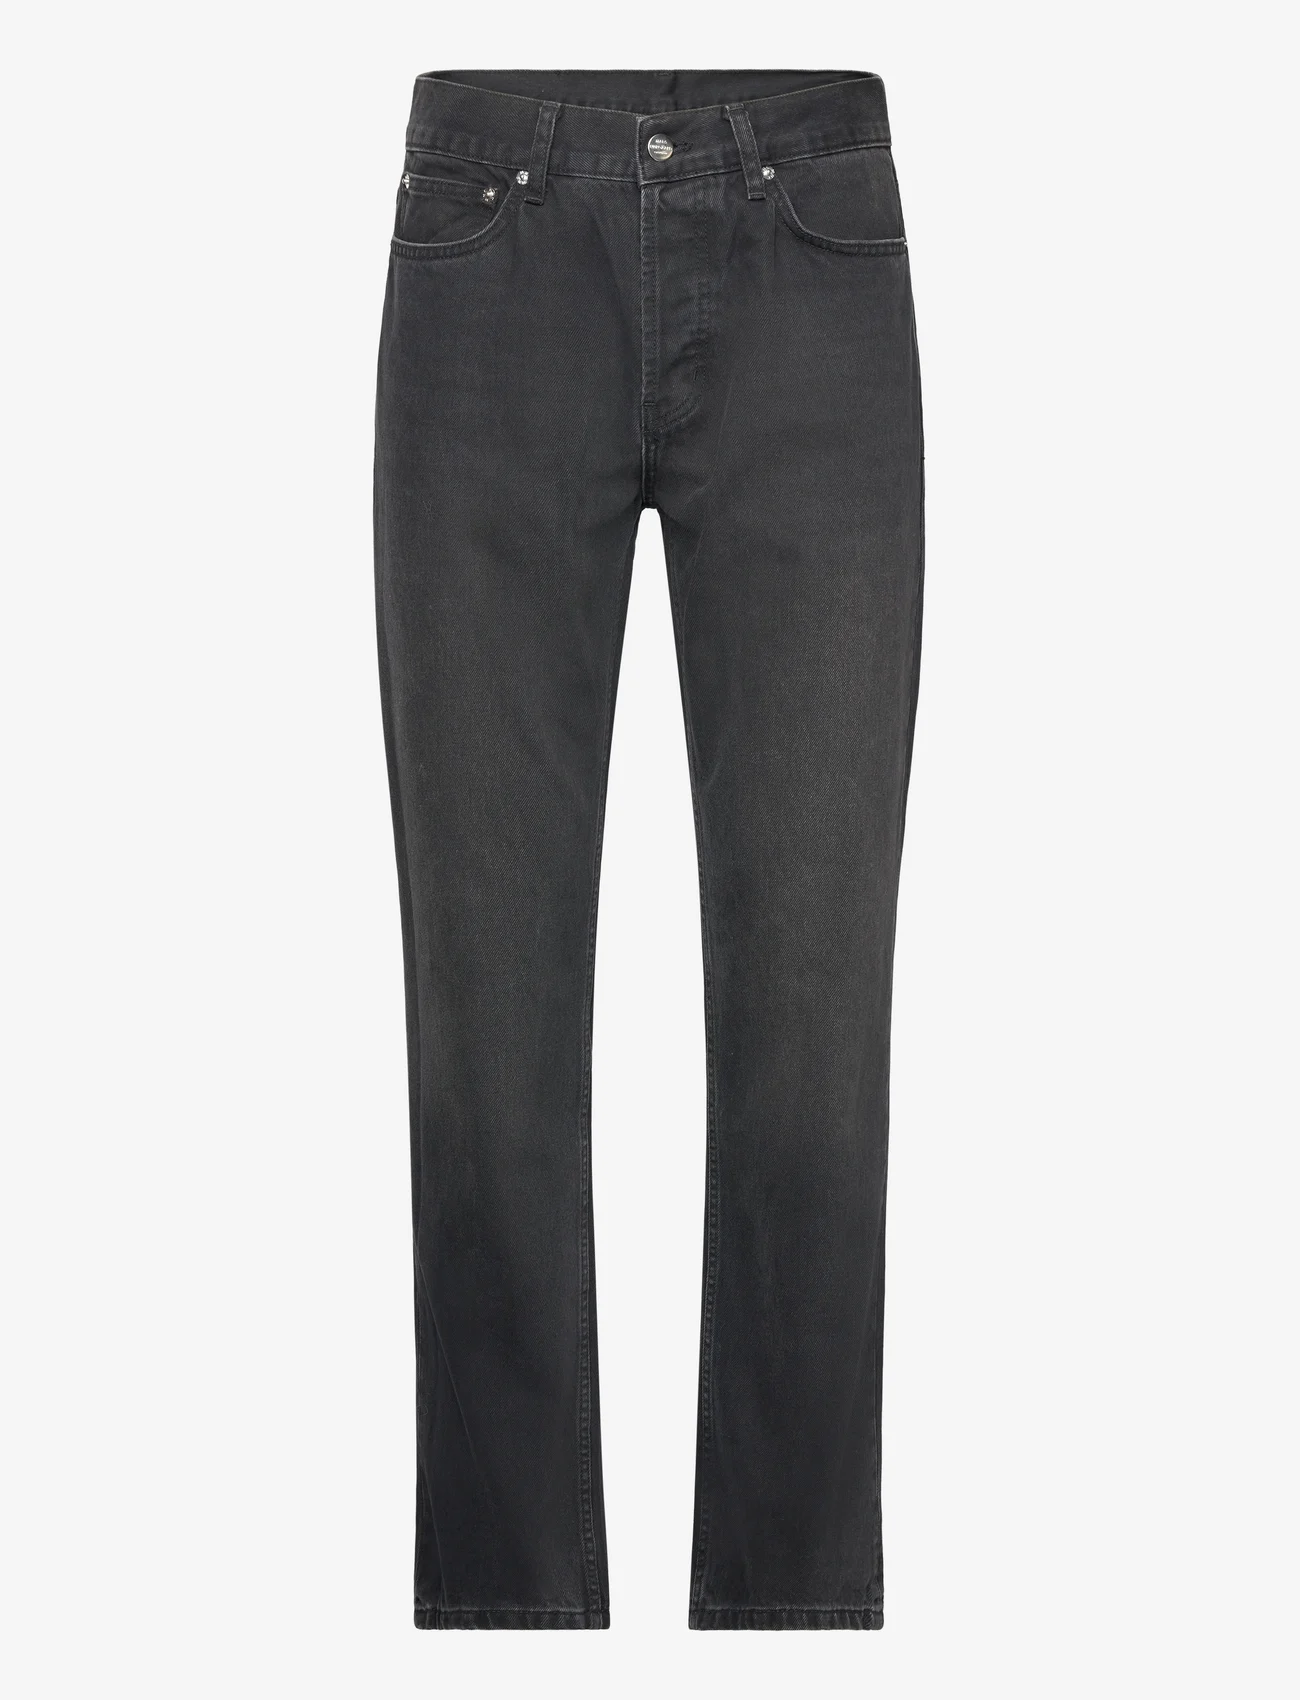 Mads Nørgaard - Organic Black Jas Jeans - regular fit -farkut - black stone - 0